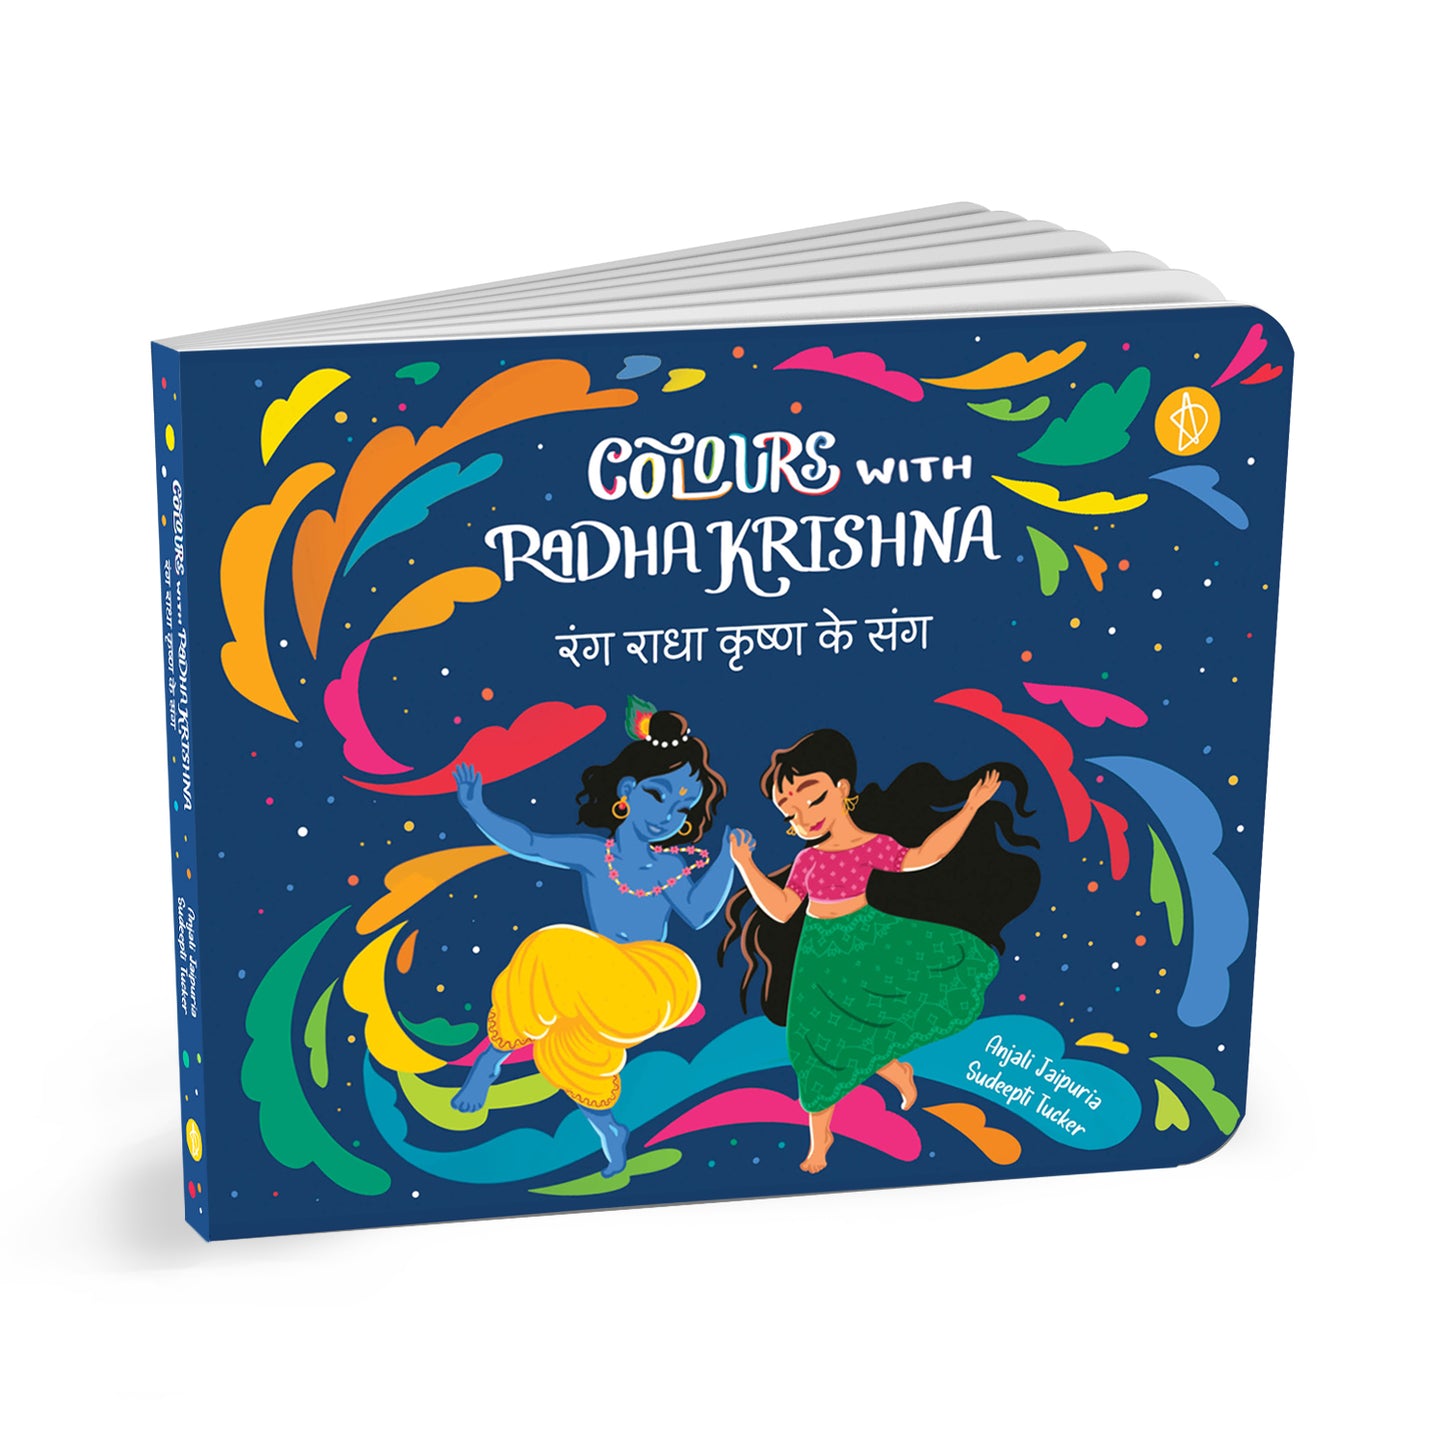 Colours with Radha Krishna by Adidev Press